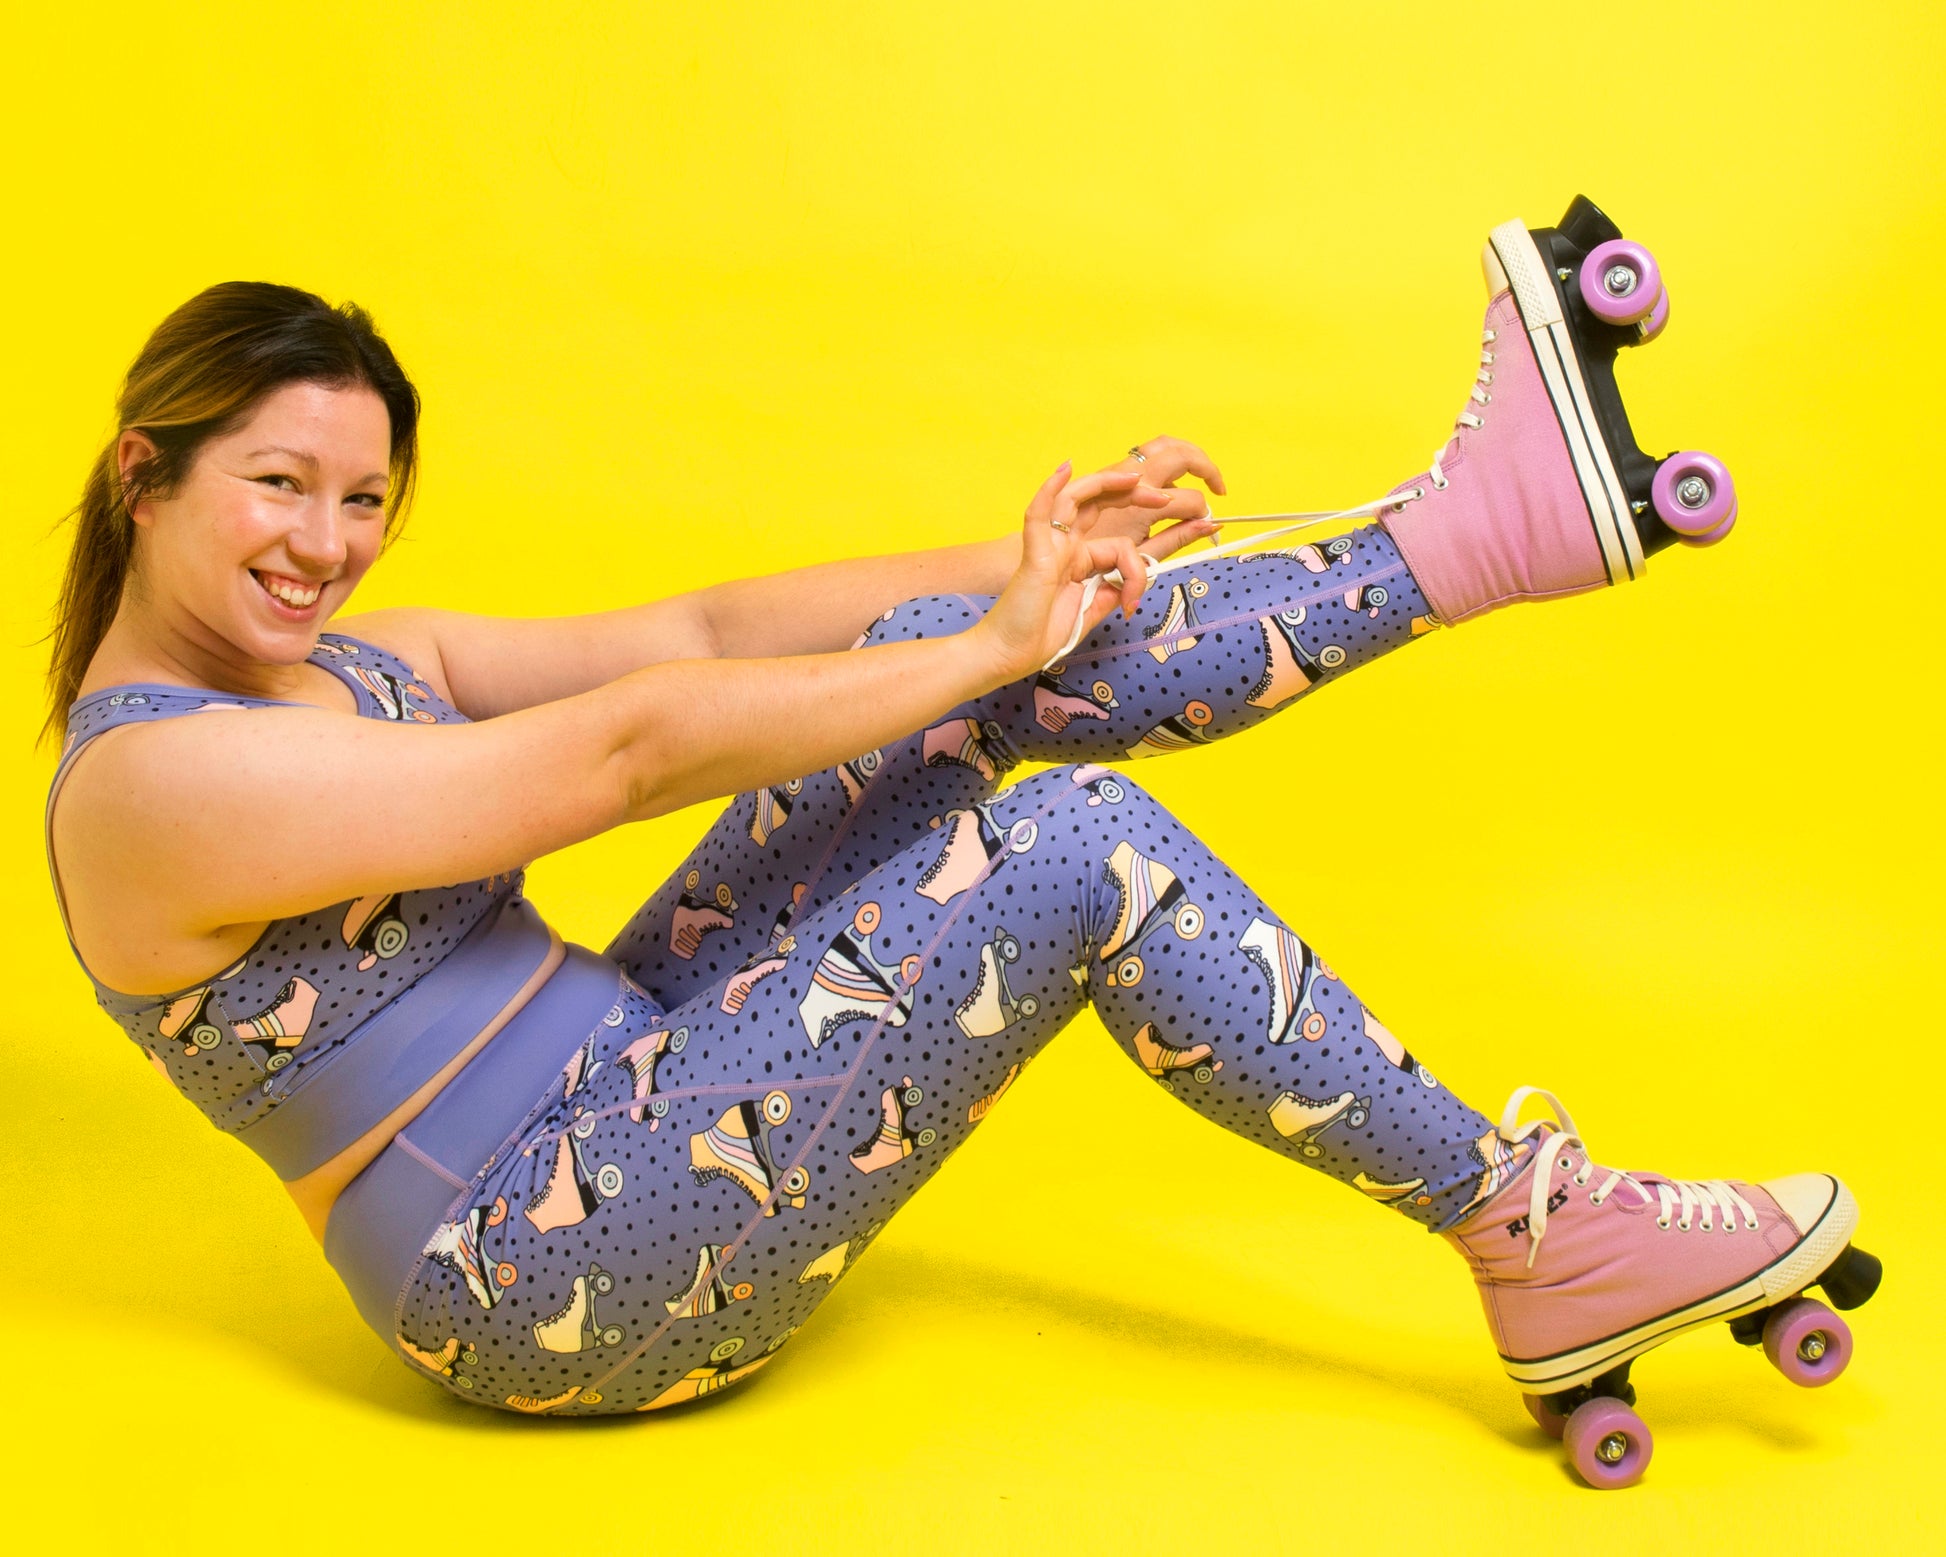 Purple Spots Roller Skates Women's Activewear Leggings - Regular 27 i –  Rainbows & Sprinkles